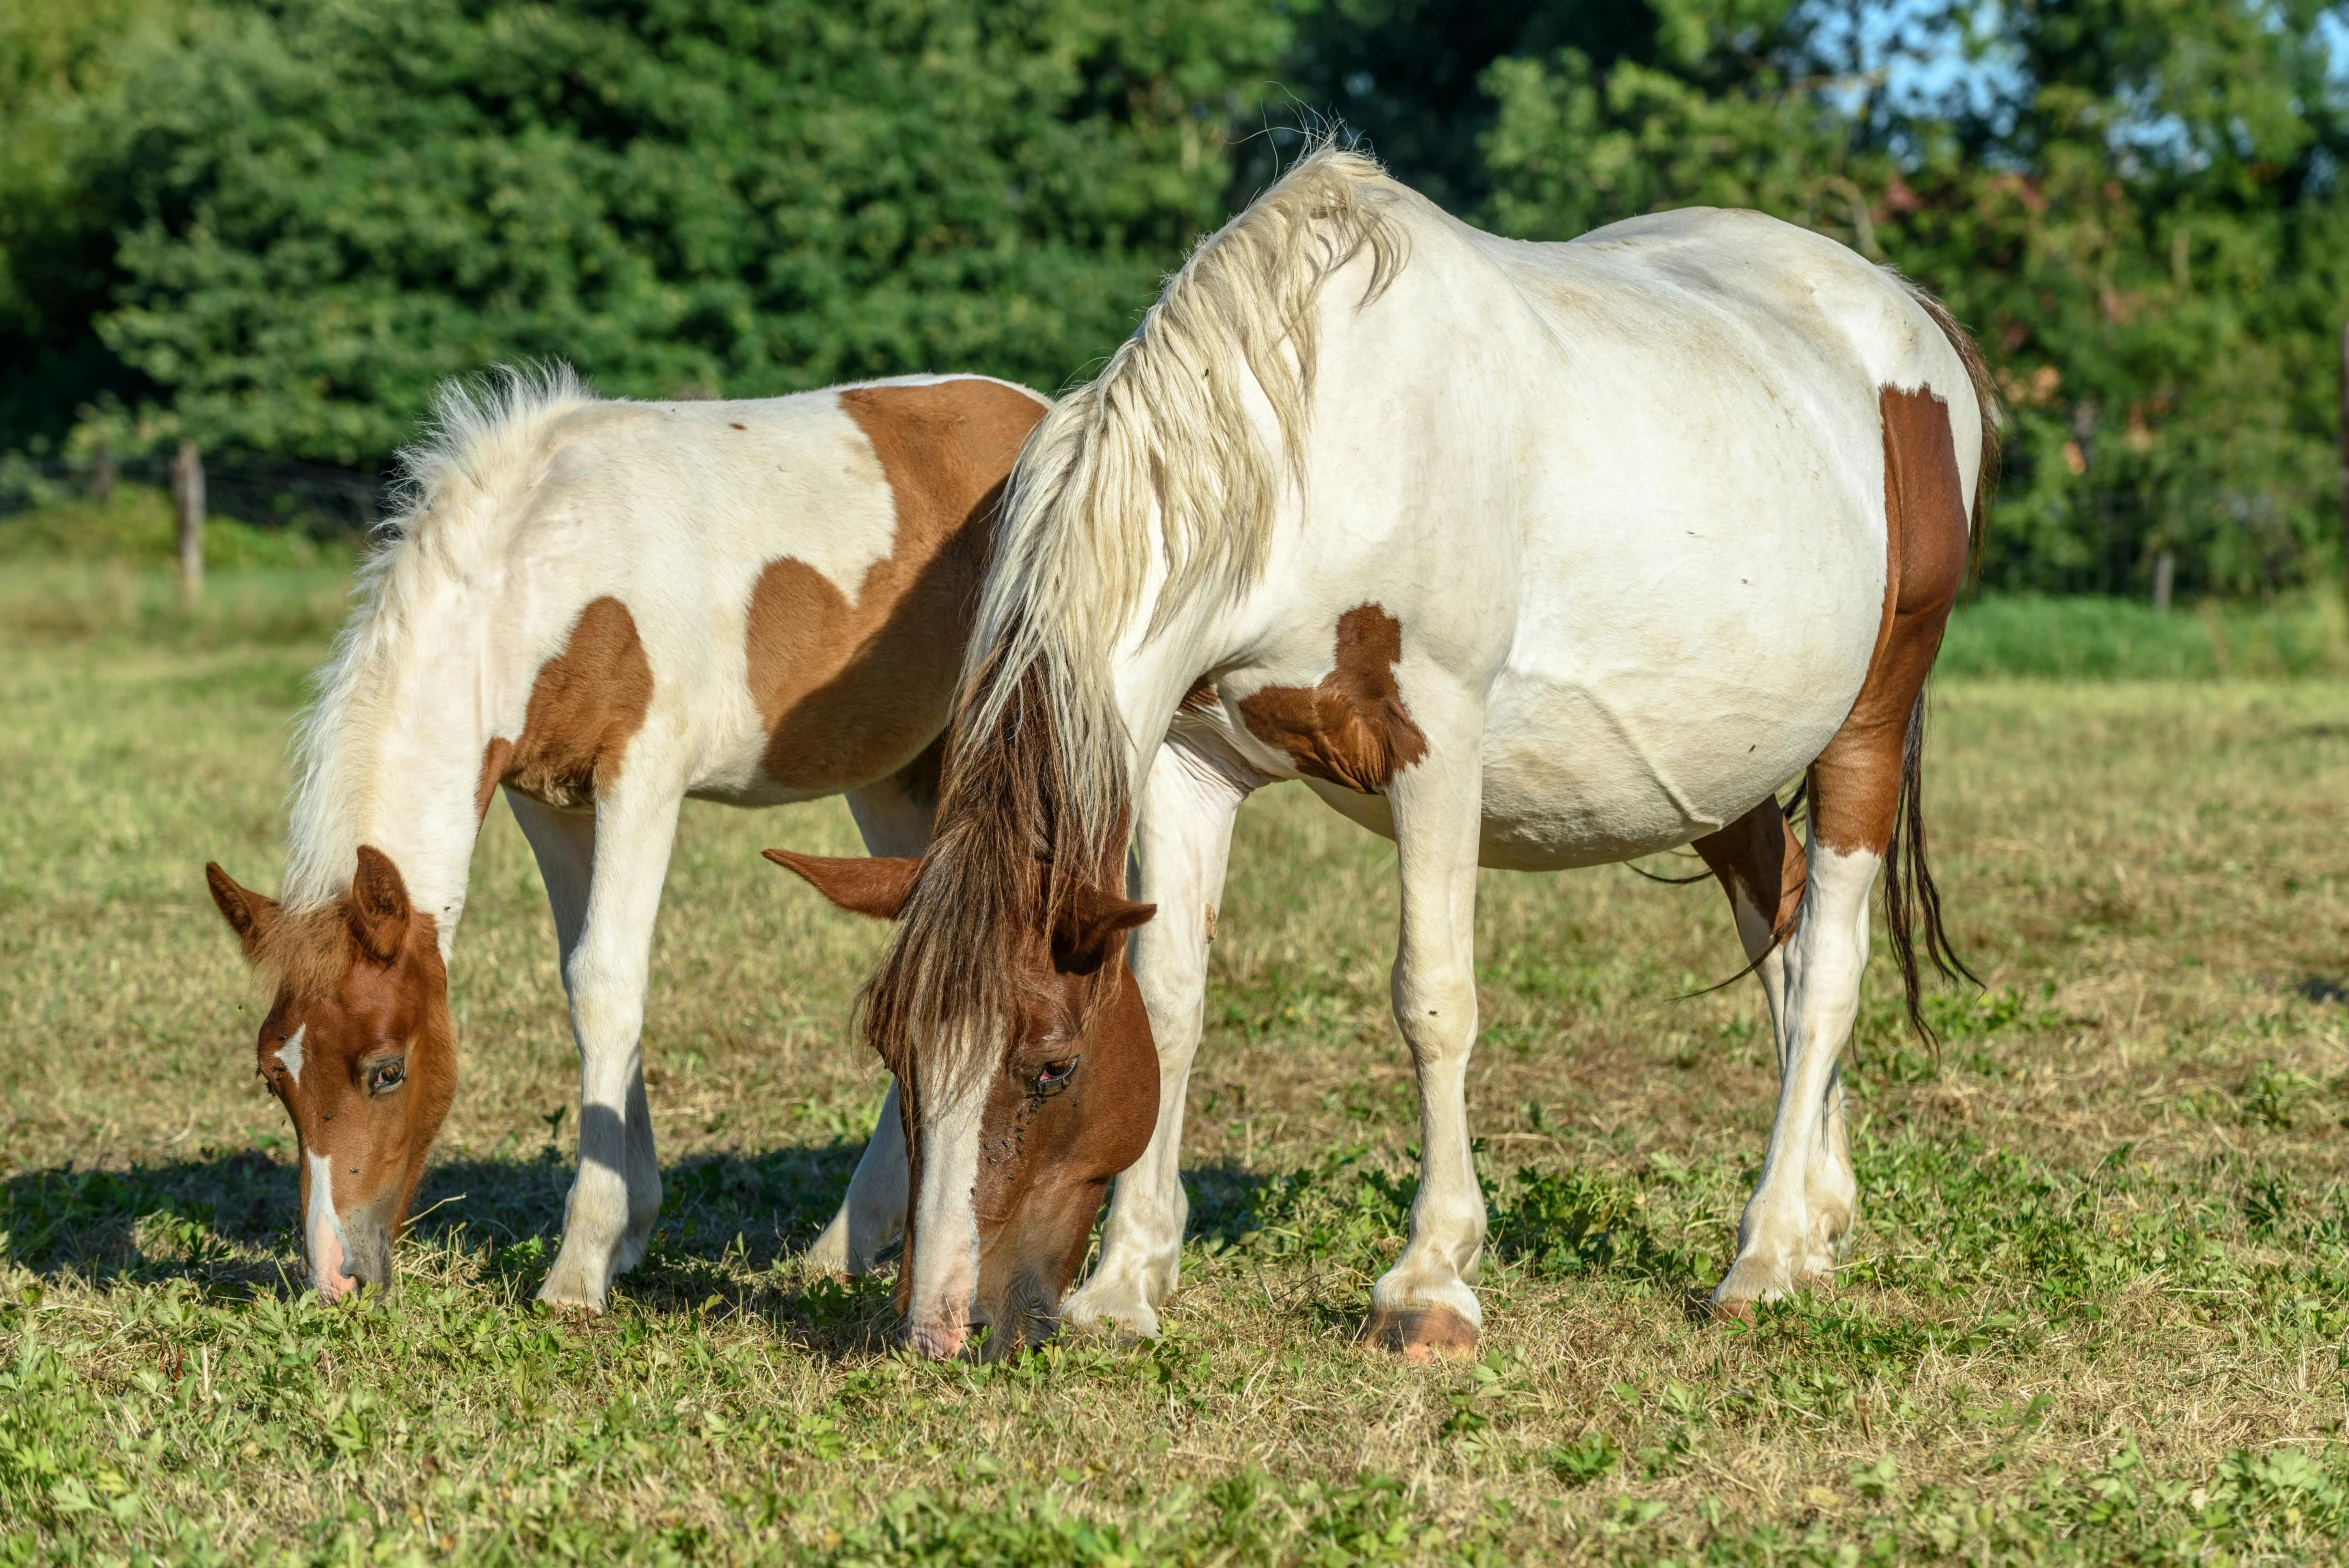 two horses grazing in an open grassy field